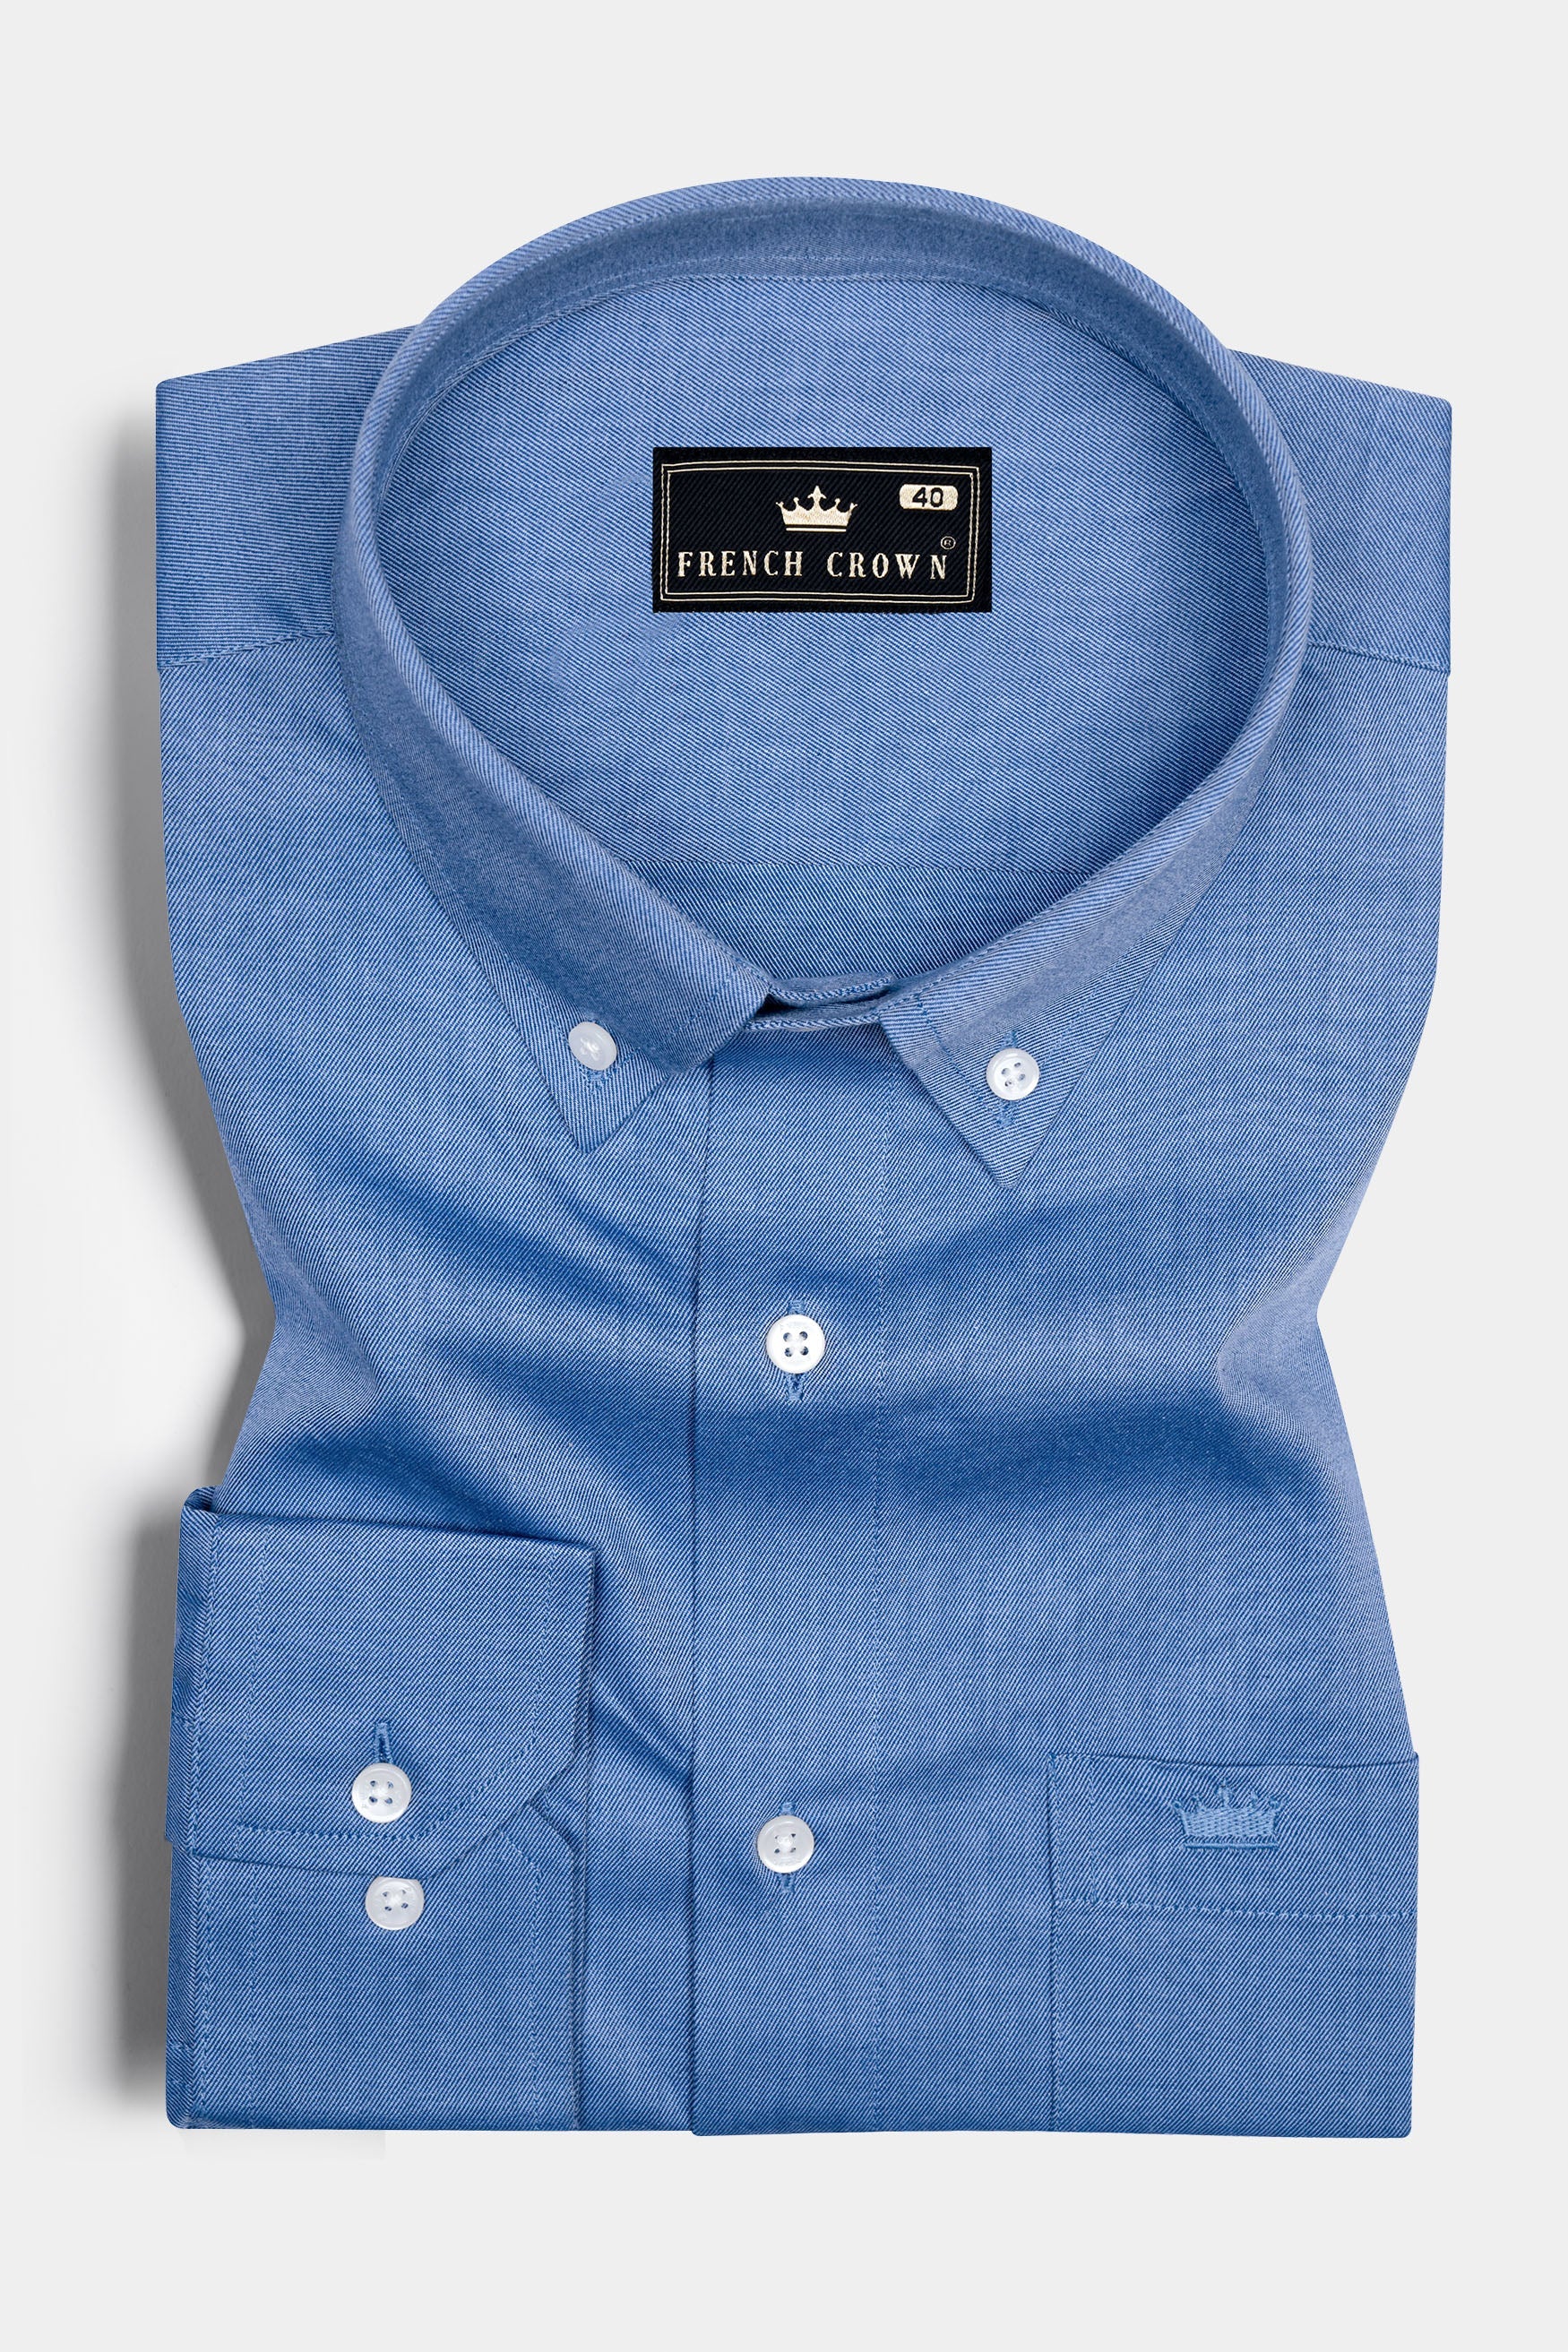 Marino Blue Textured Twill Premium Cotton Shirt